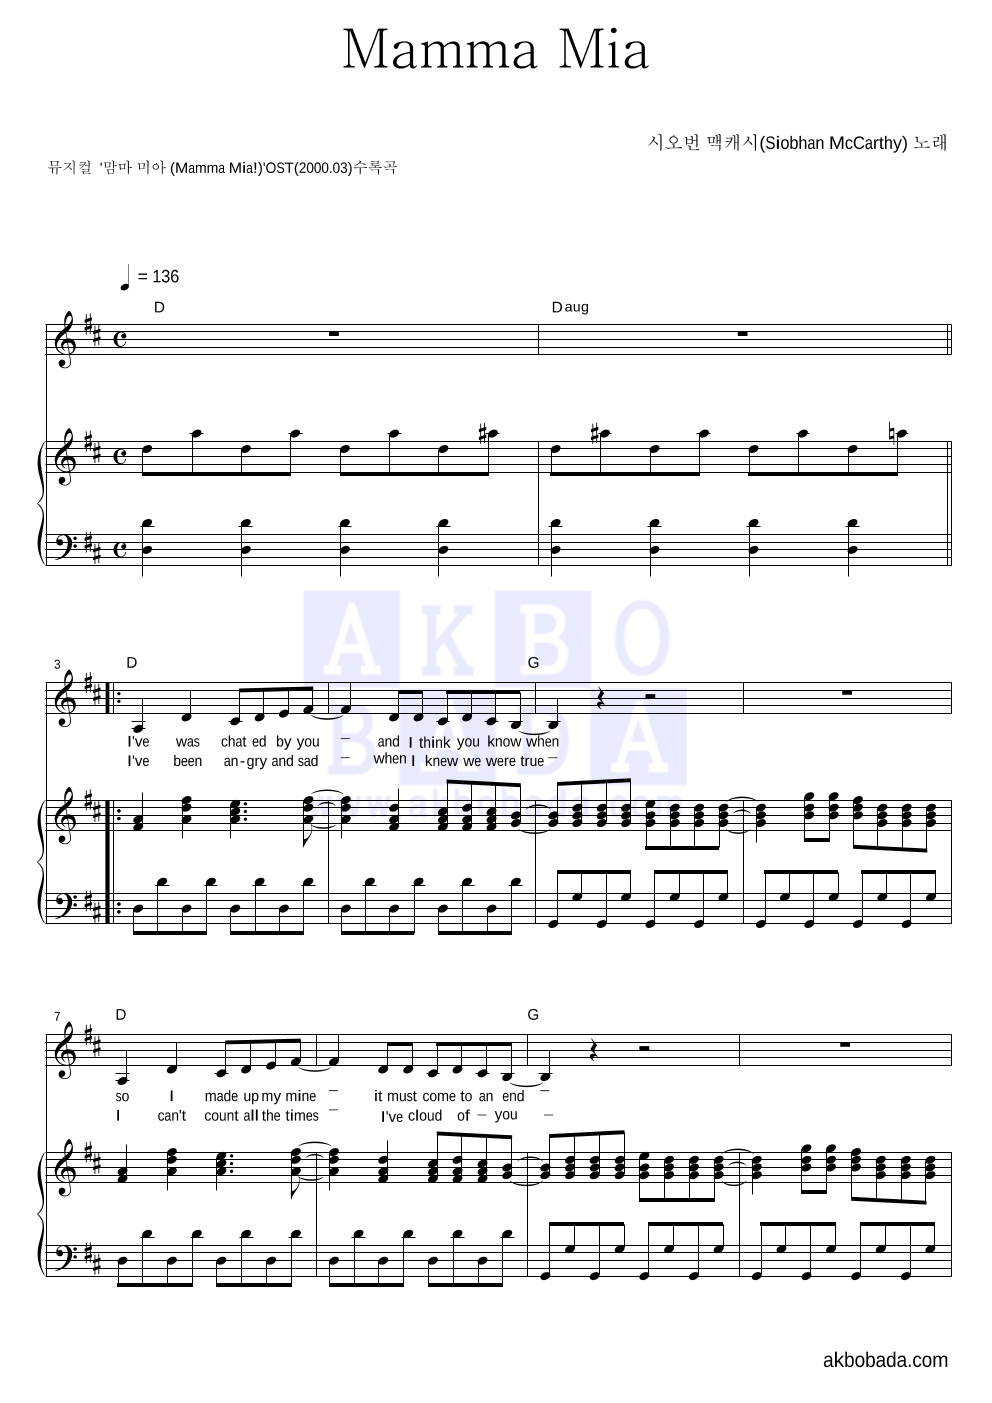 Siobhan McCarthy - 맘마미아 (Mamma Mia!) 피아노 3단 악보 